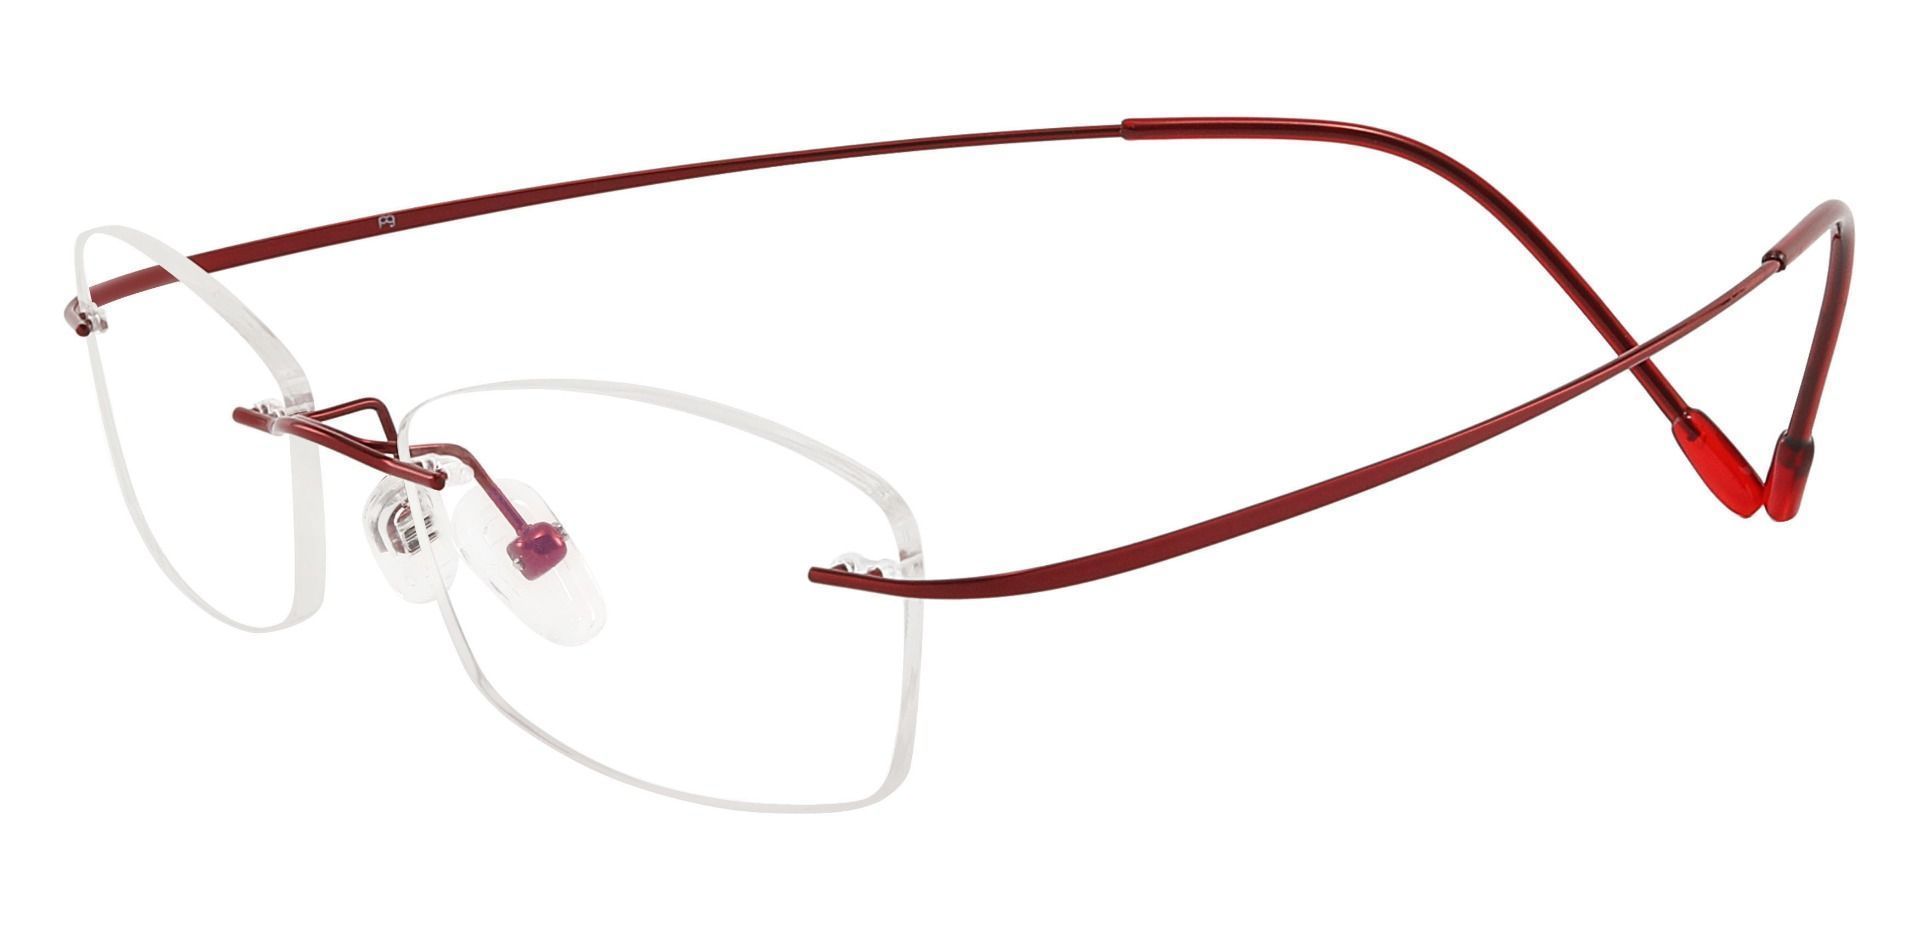 Providence Rimless Single Vision Glasses - Red